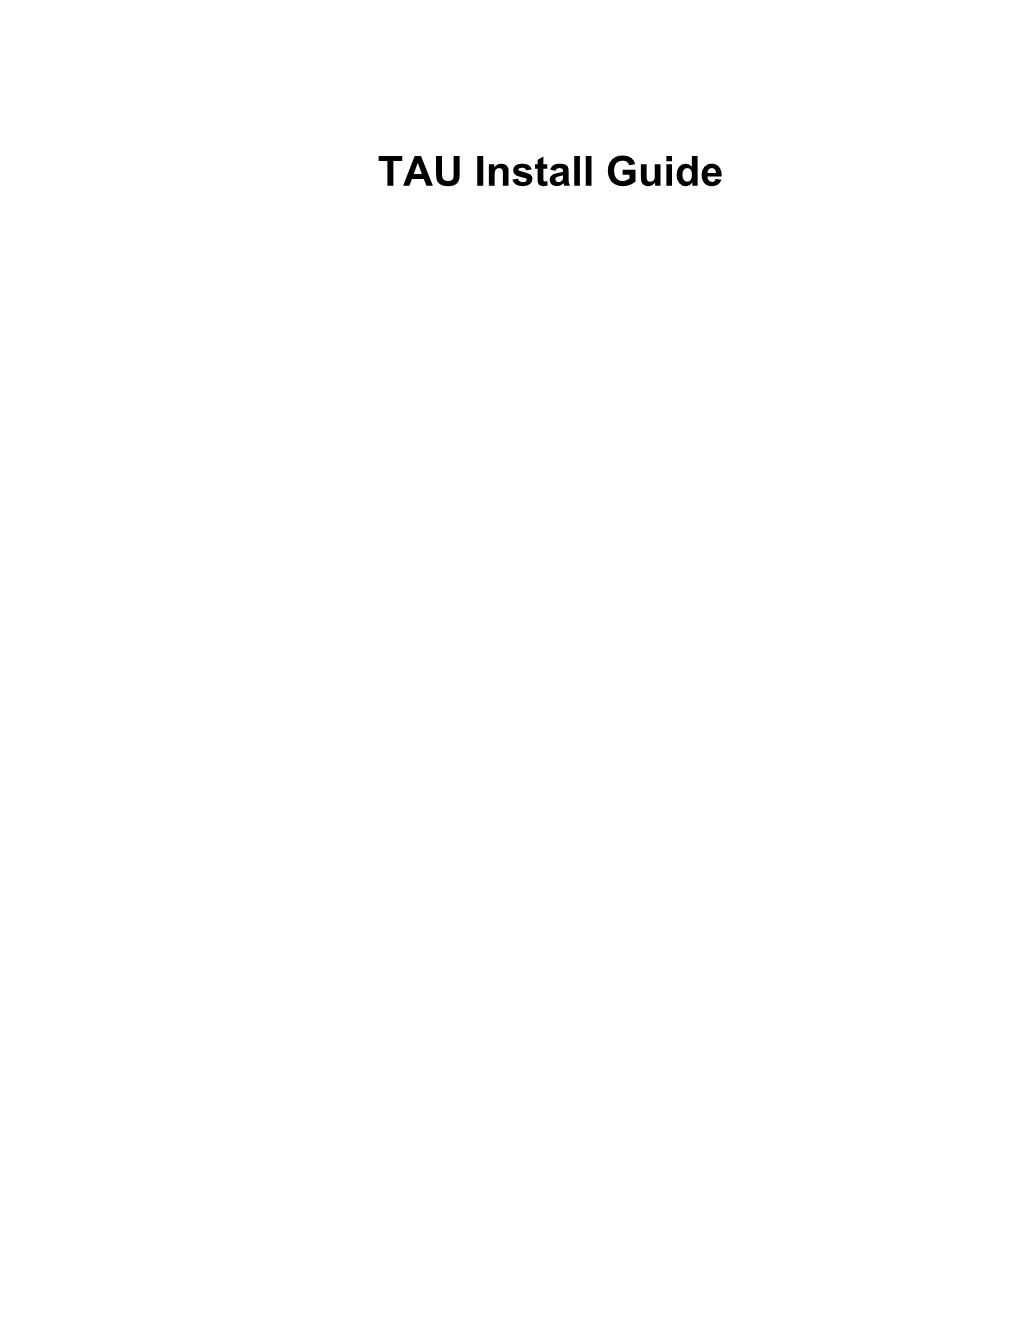 TAU Install Guide TAU Install Guide